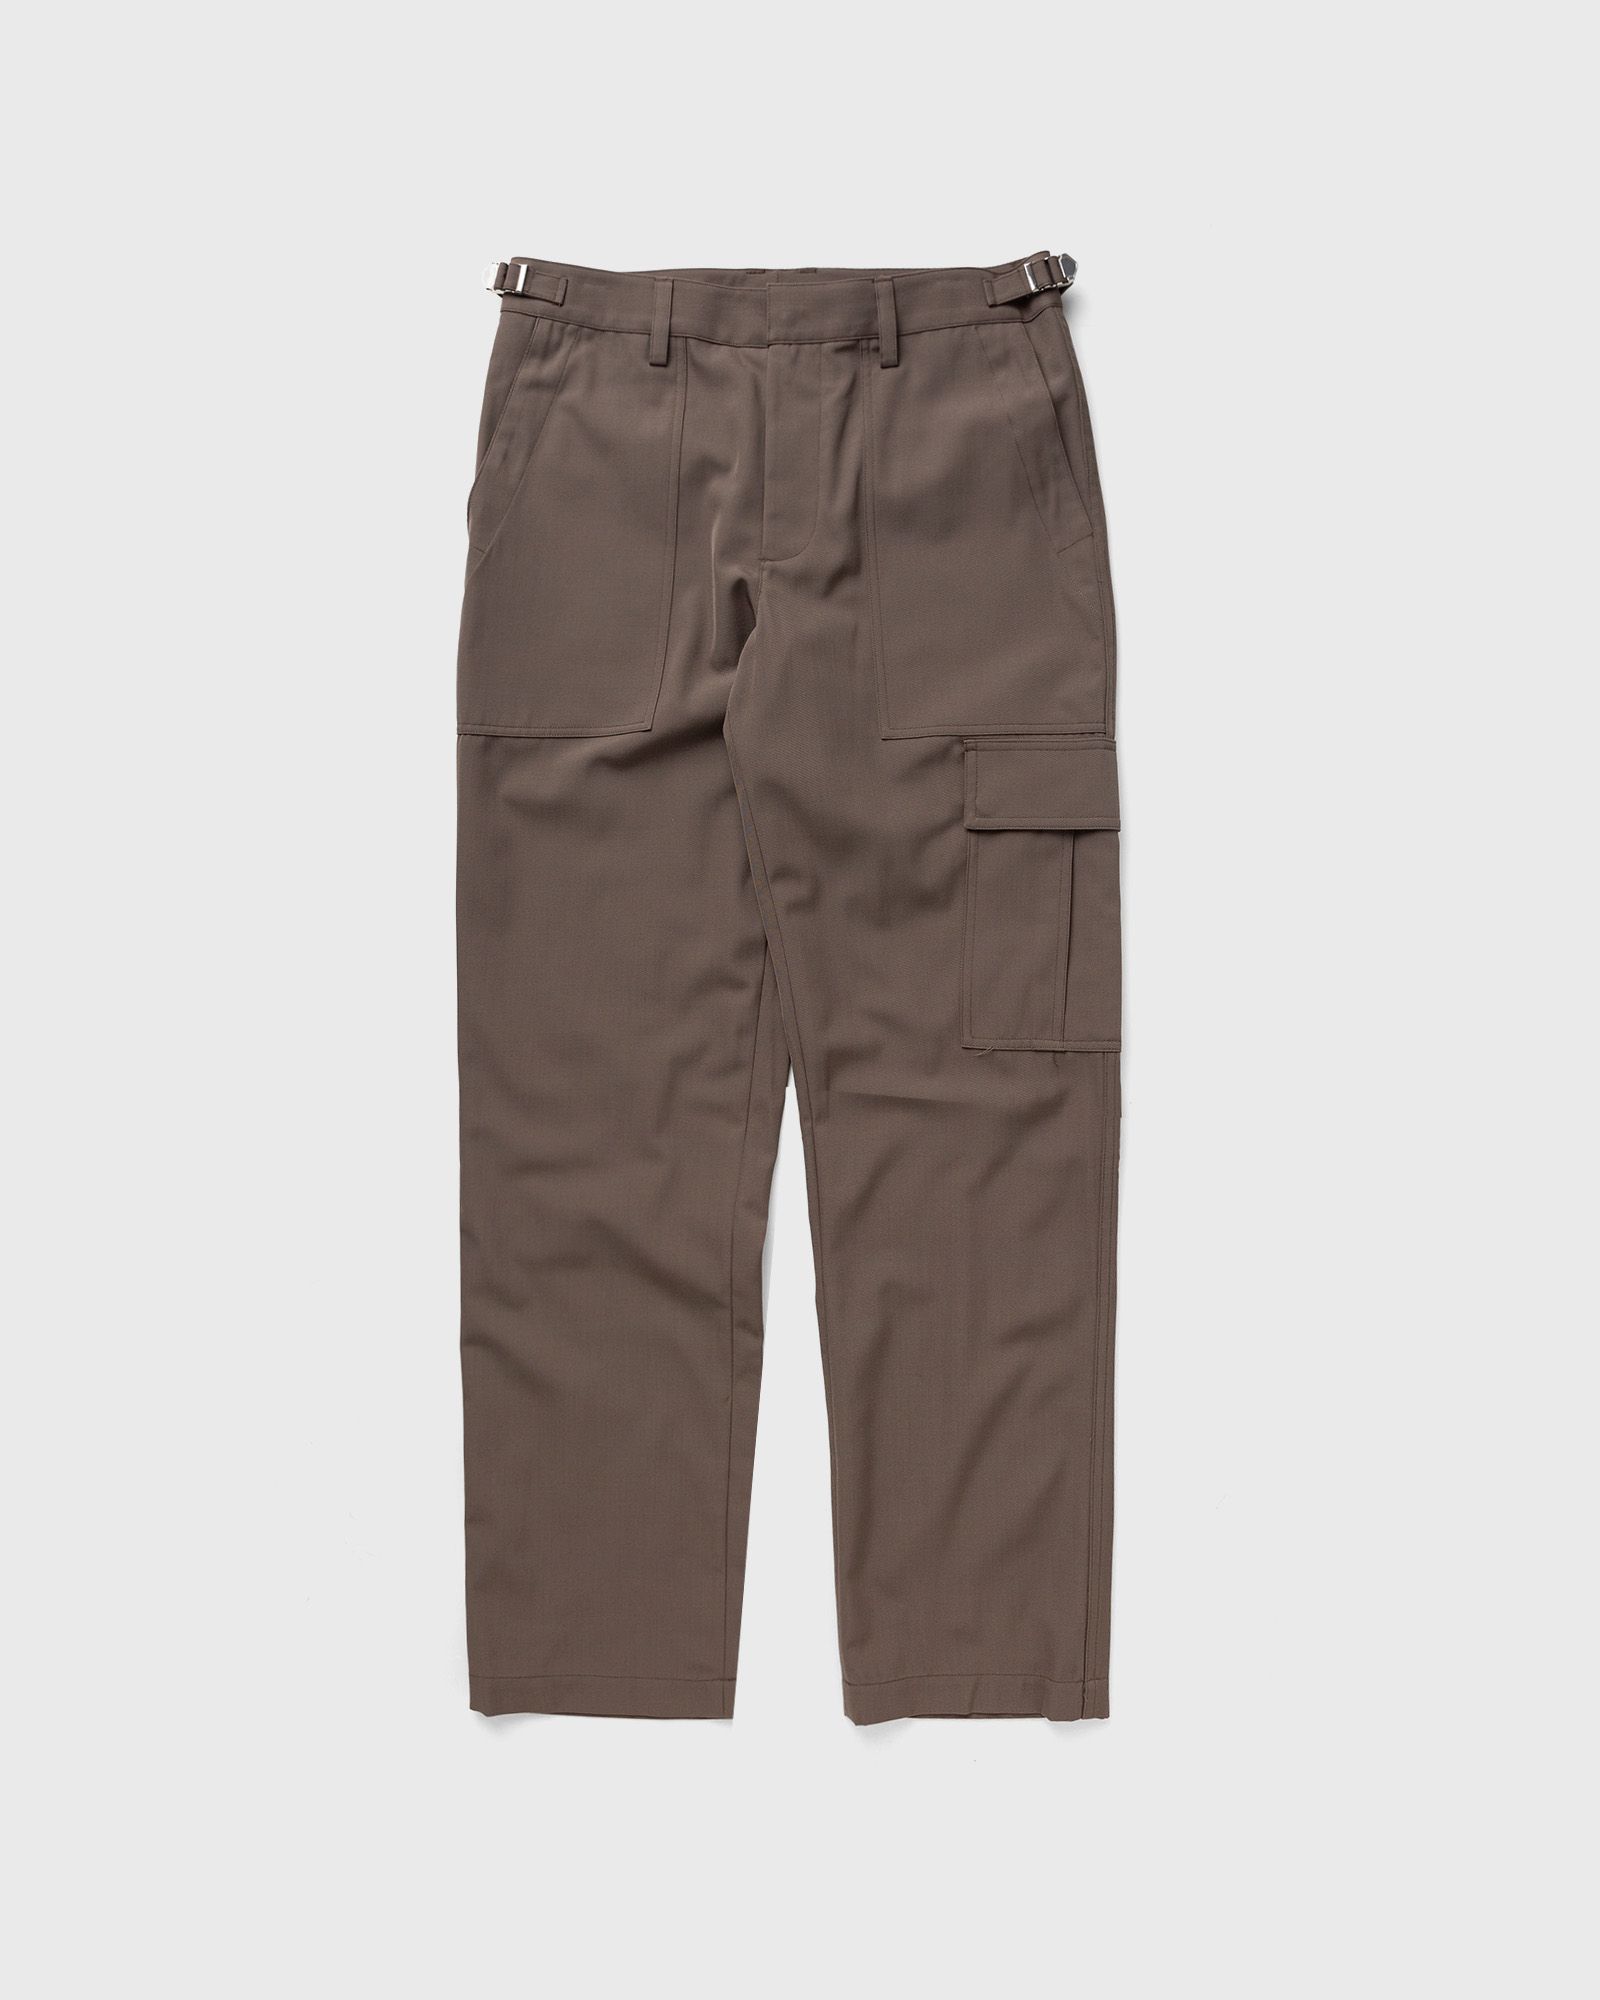 Helmut Lang - military pant men cargo pants brown in größe:l